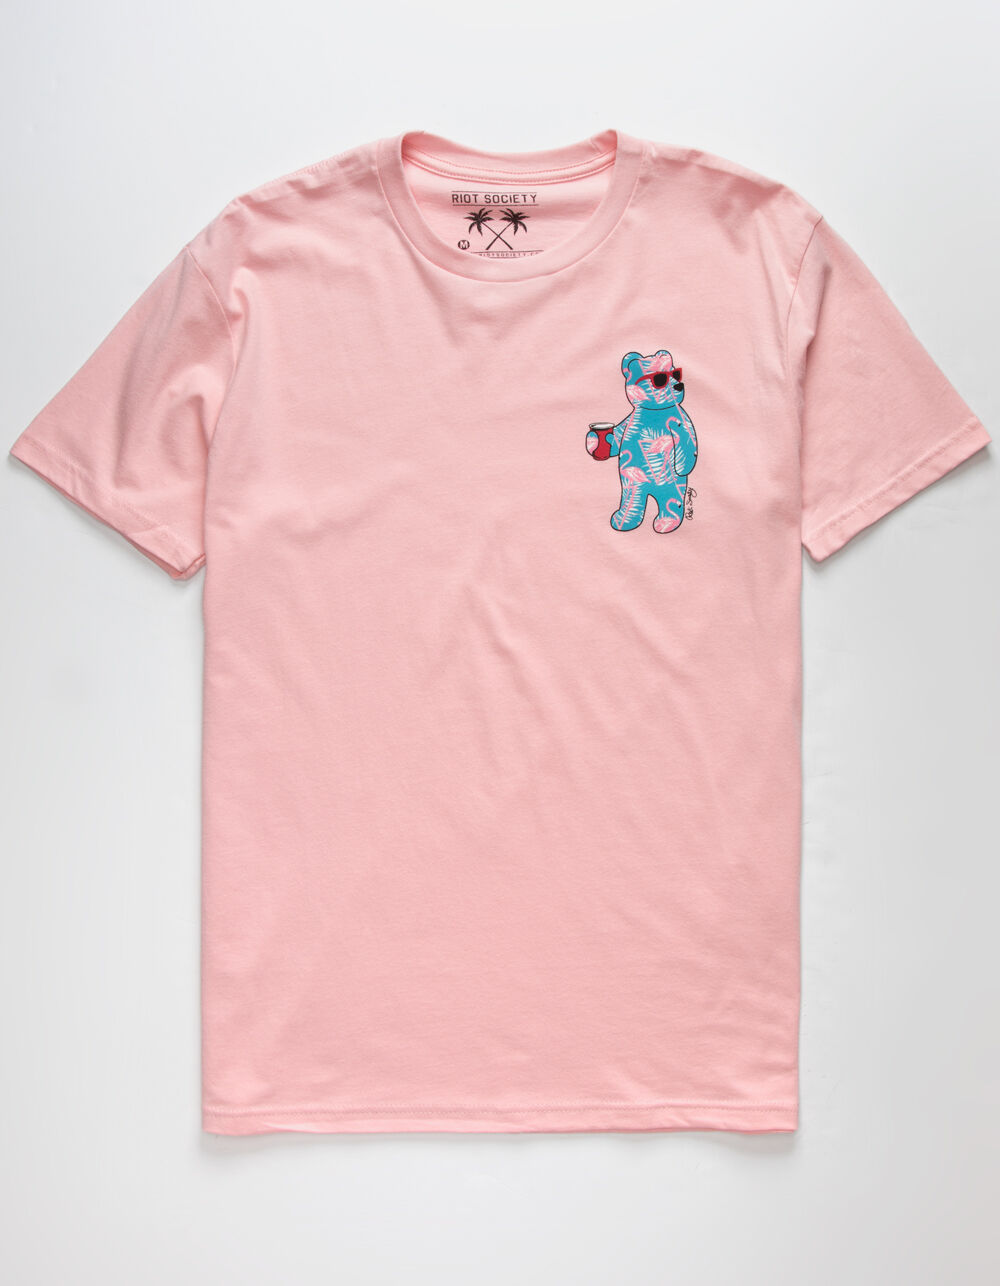 RIOT SOCIETY Flamingo Bear Mens T-Shirt